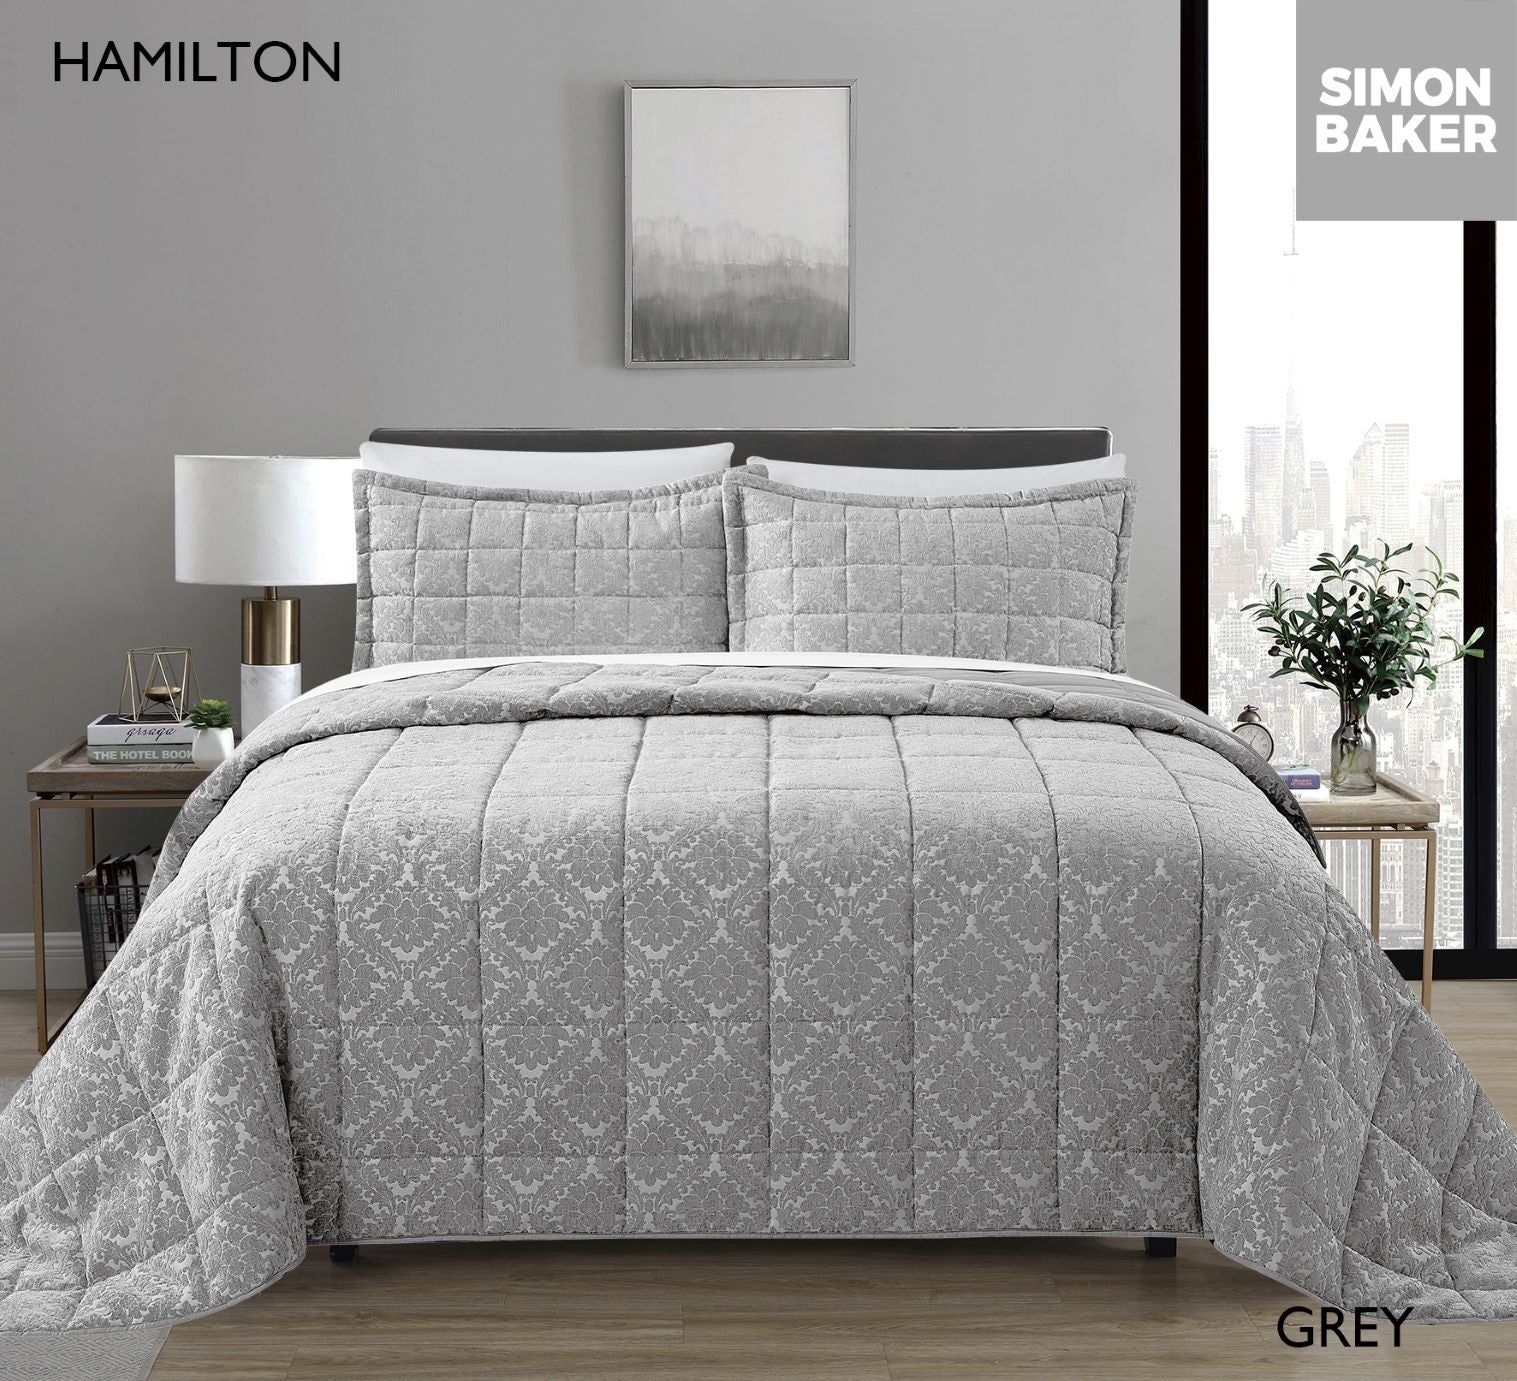 Hamilton Comforter Set